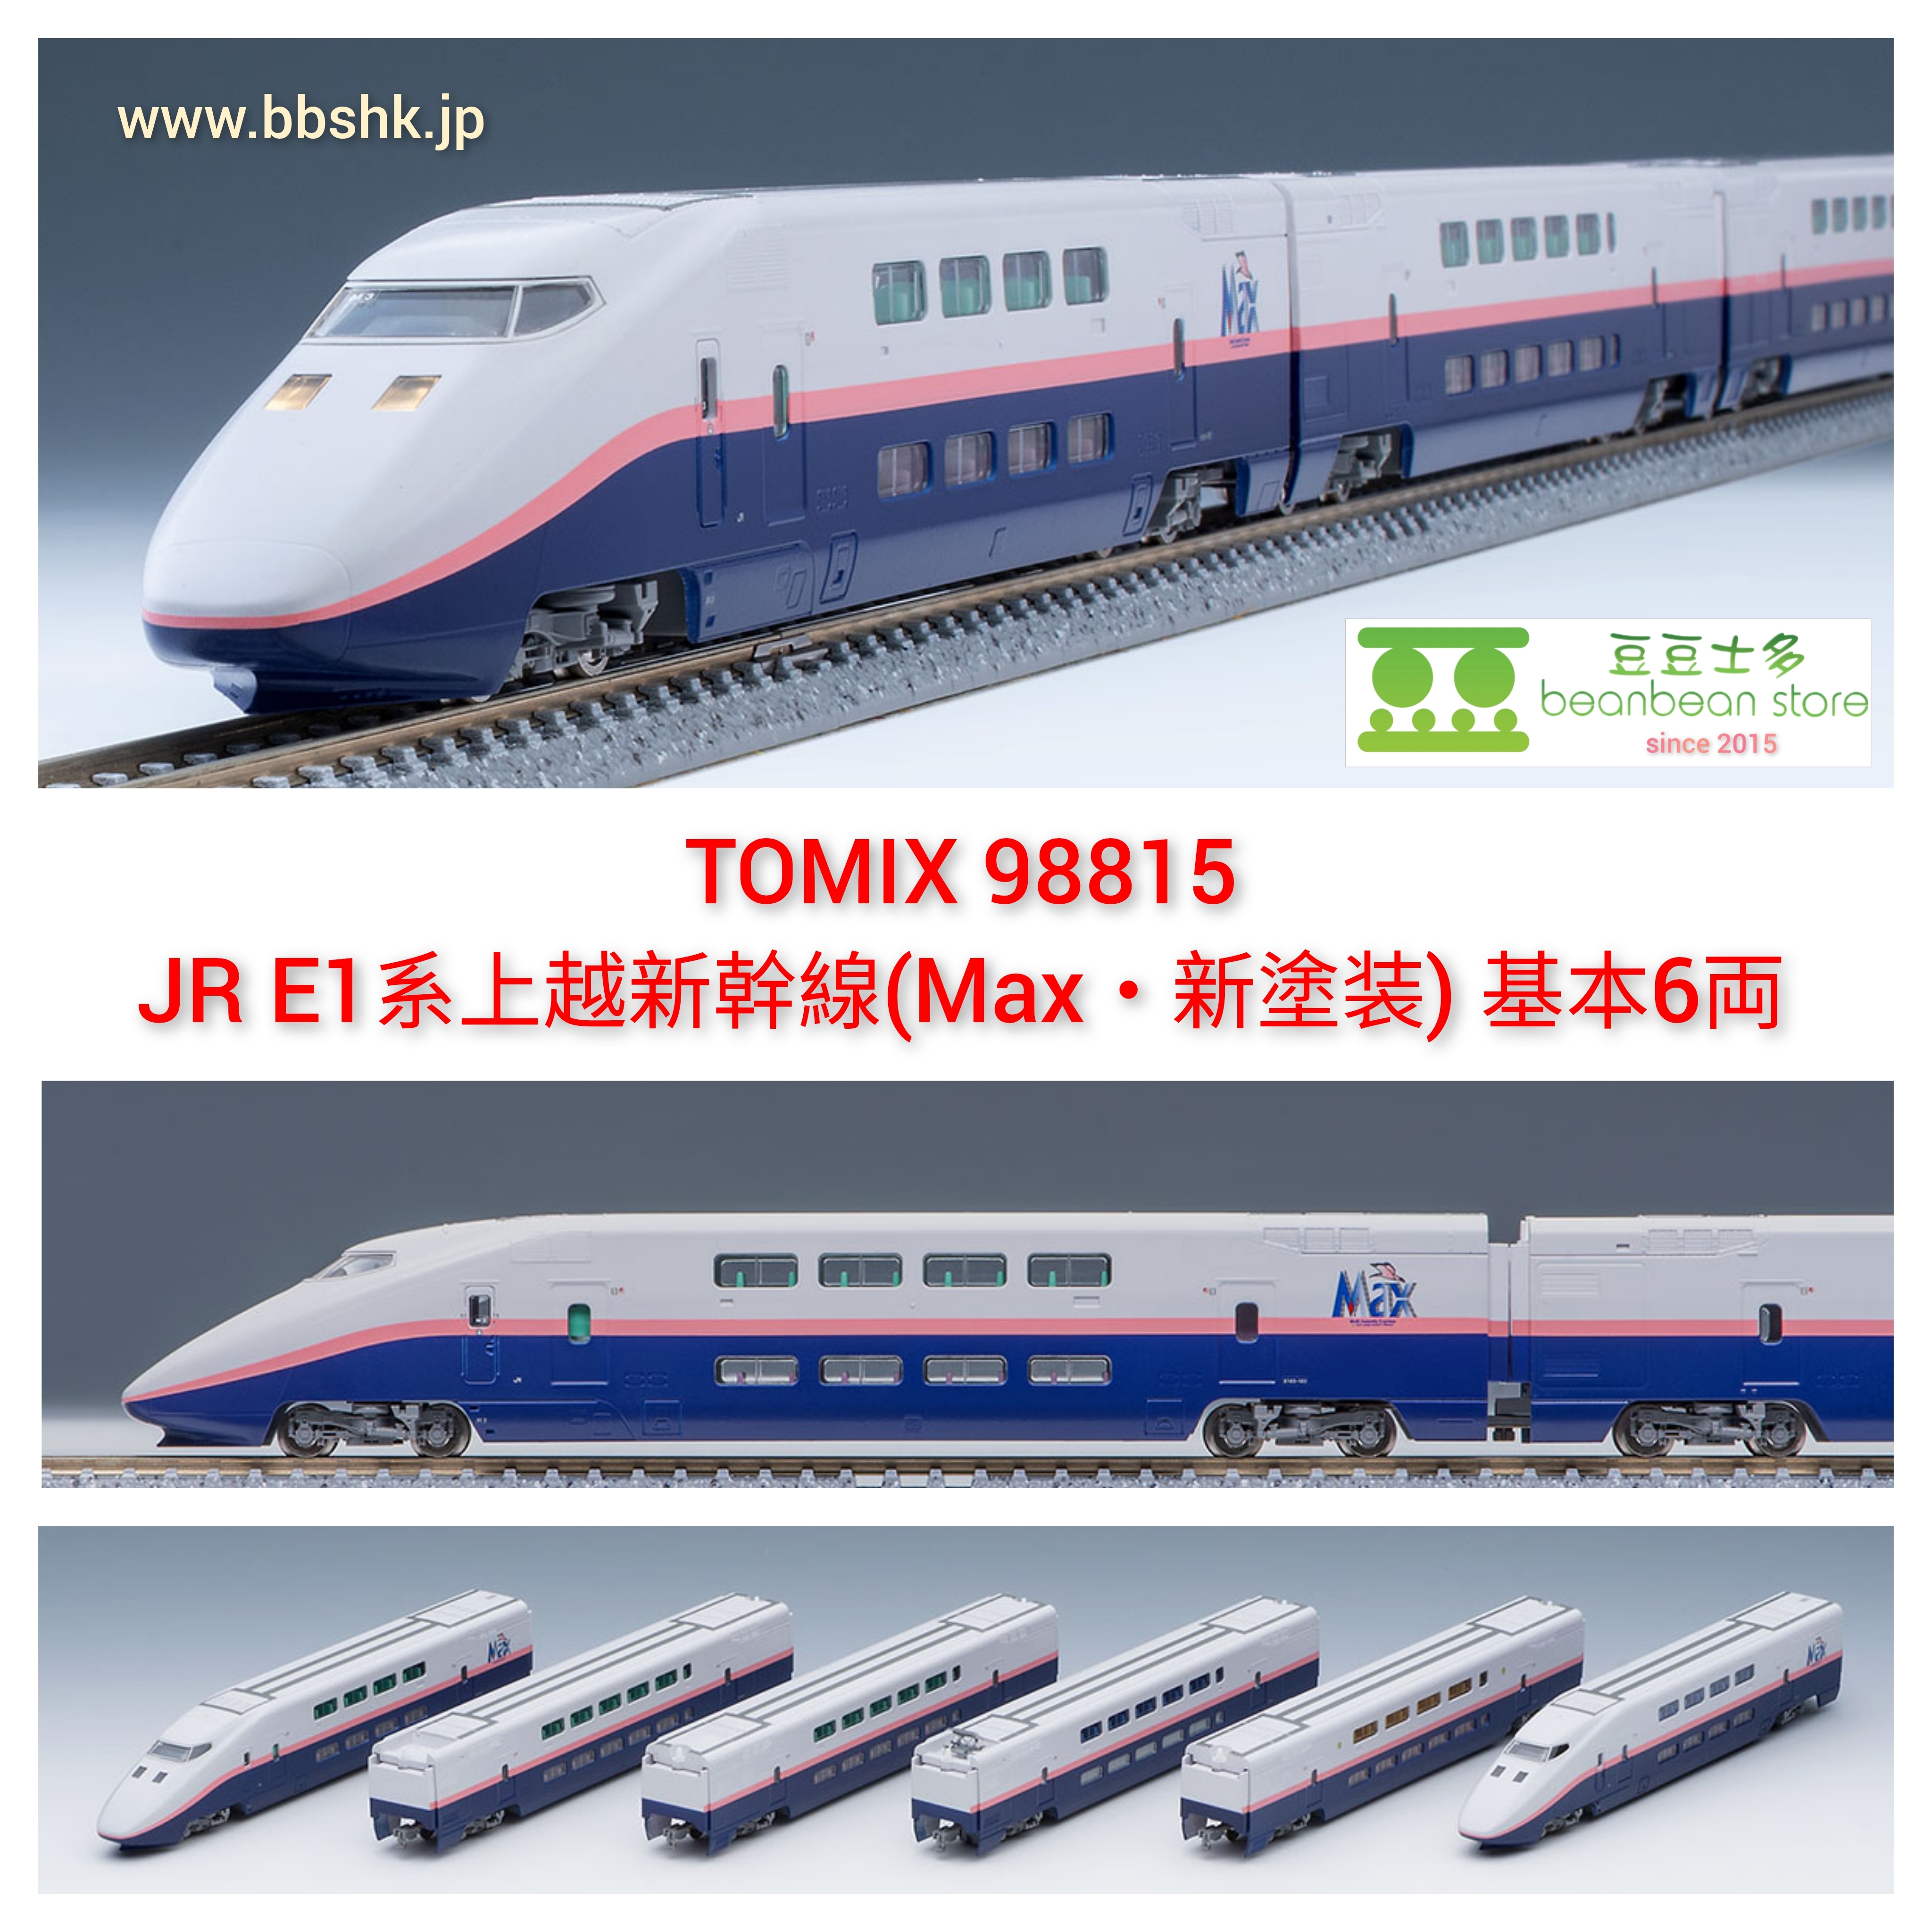 TOMIX 98815 JR E1系上越新幹線(Max・新塗装) 基本・6両